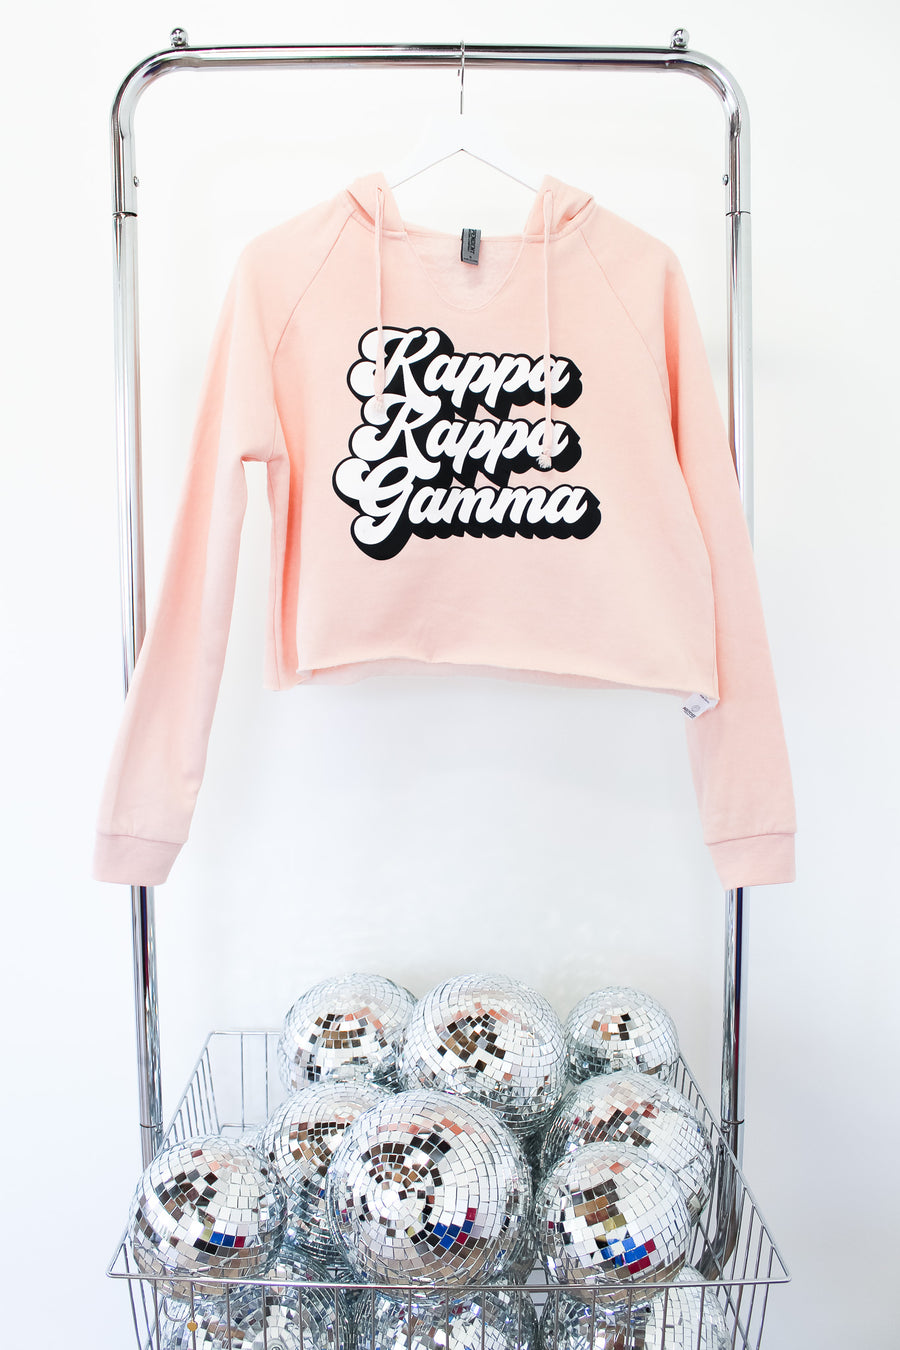 Kappa Kappa Gamma Soul Sister Crop Sweatshirt - SM COTTON CANDY